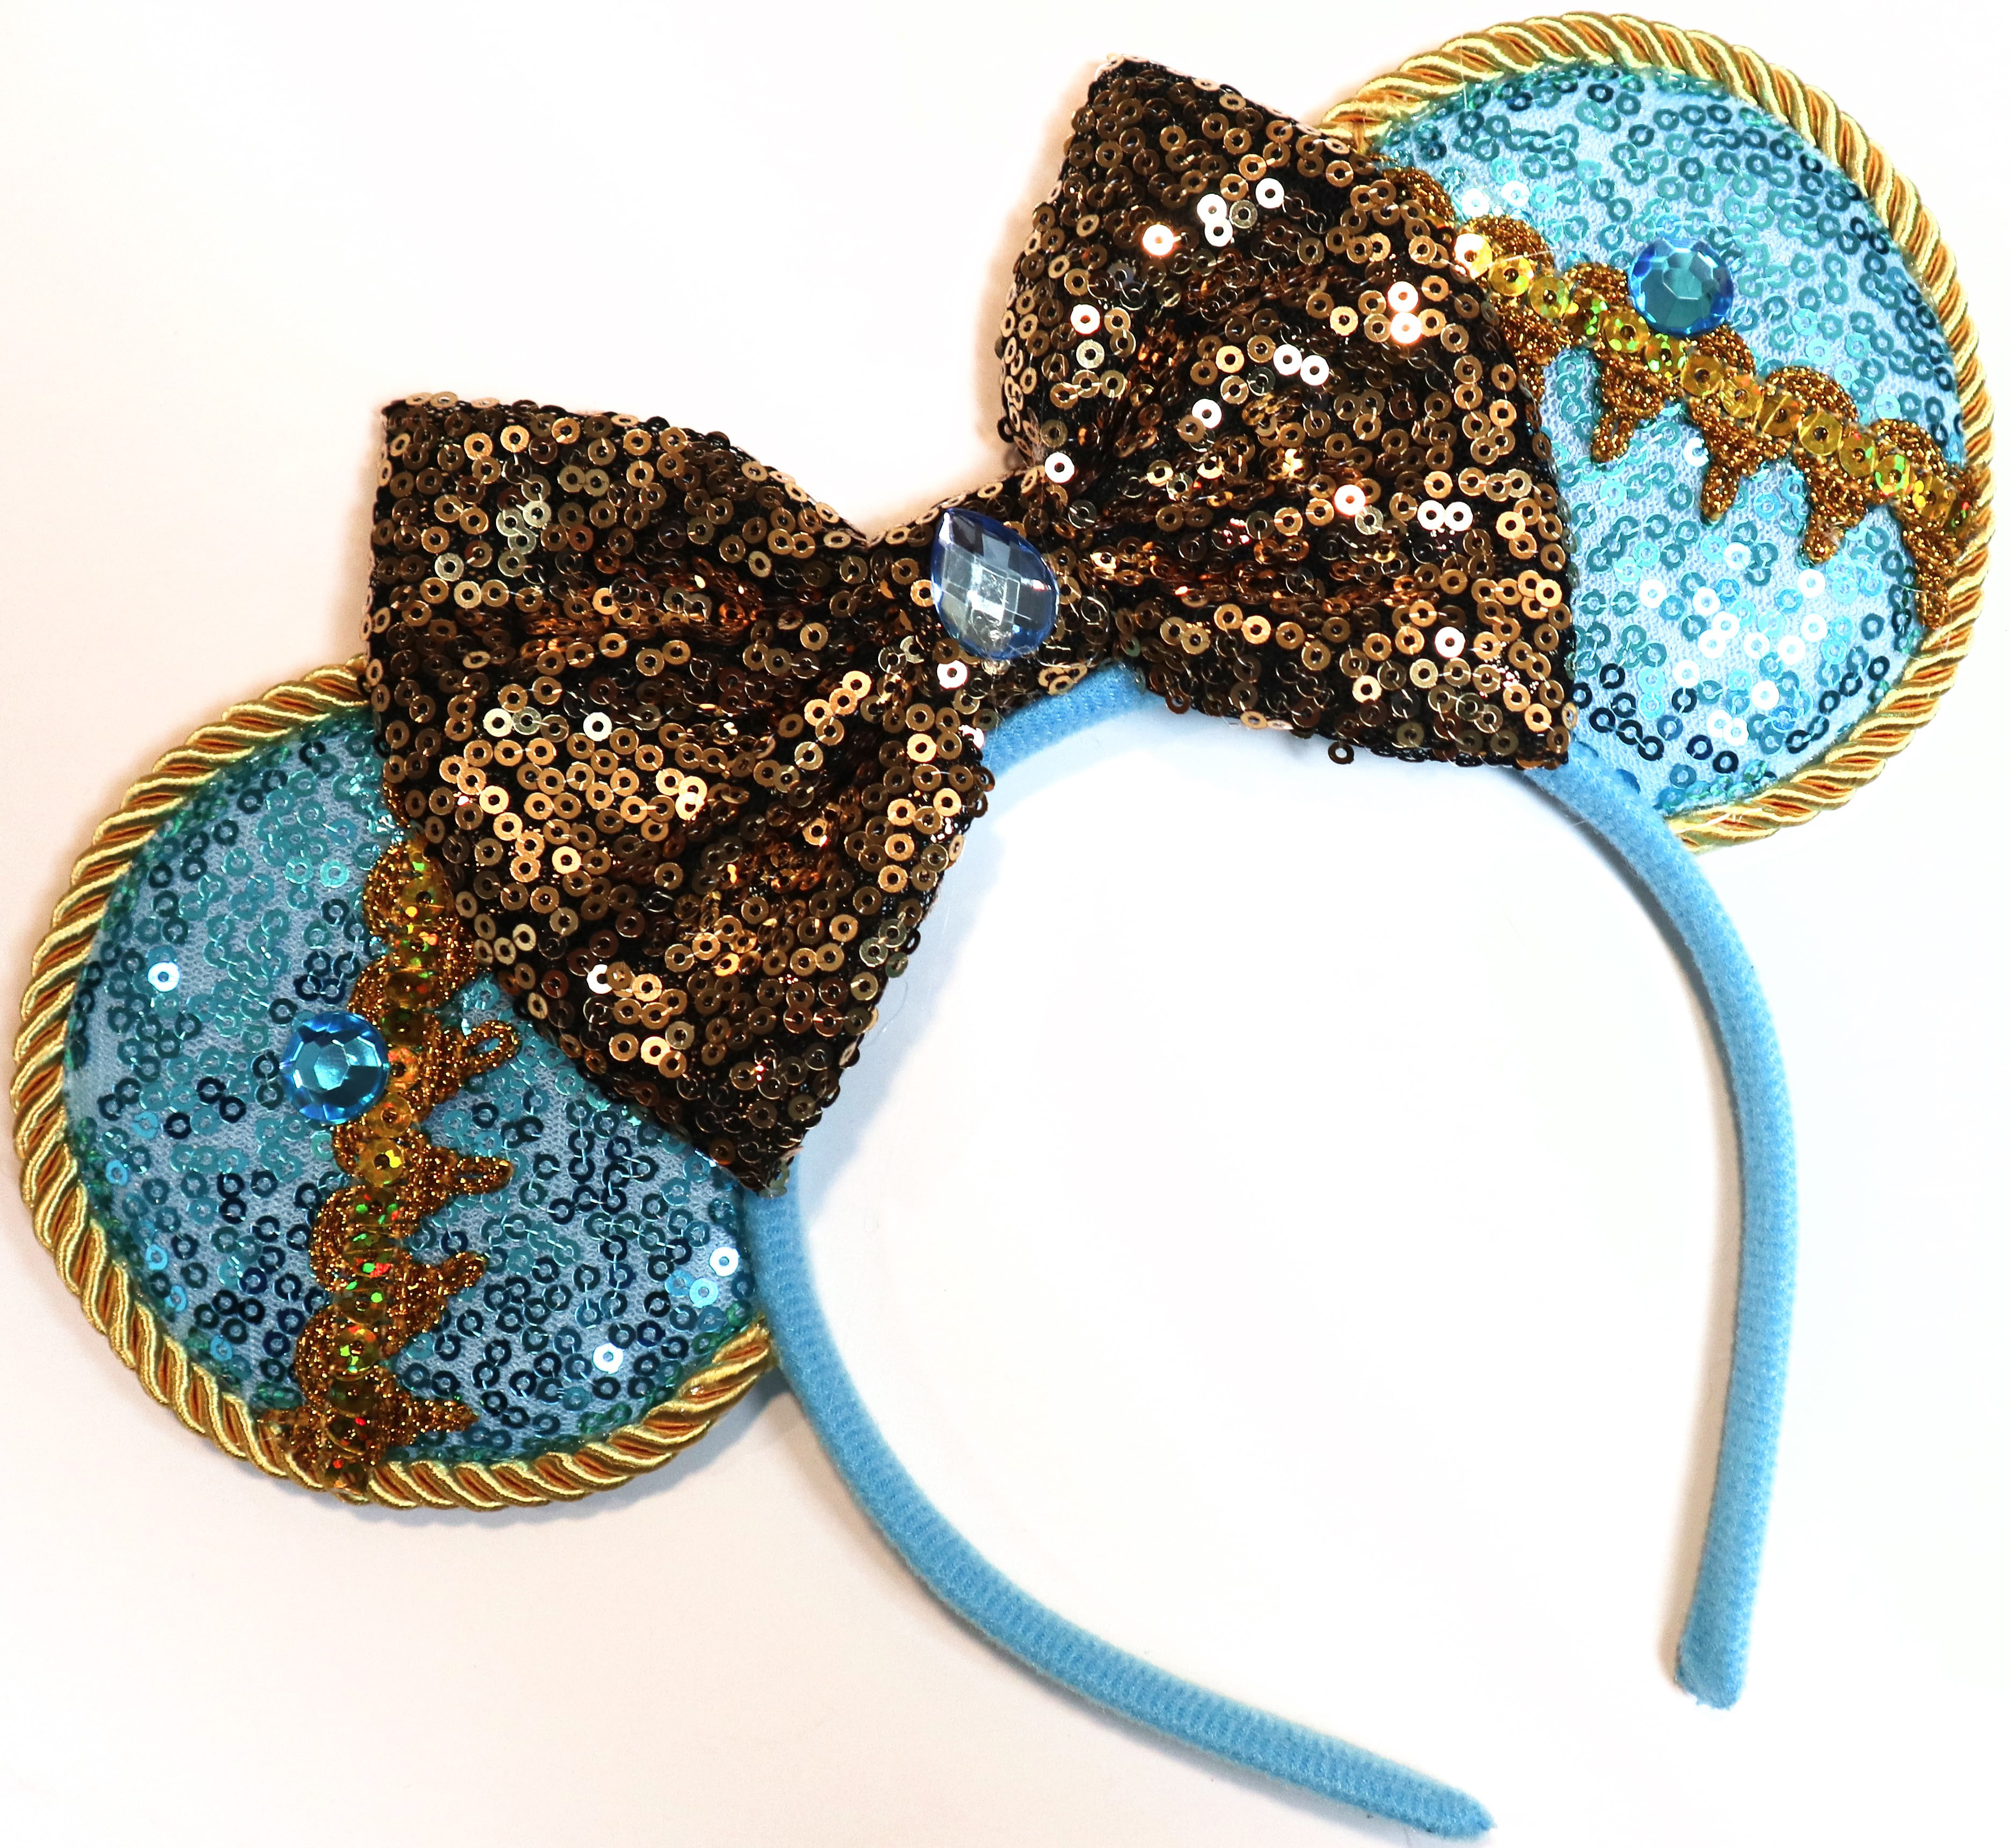 Jasmine Mouse Ears Headband-Princess Party headband,photo prop,headband,vacation,Halloween costume,dress up